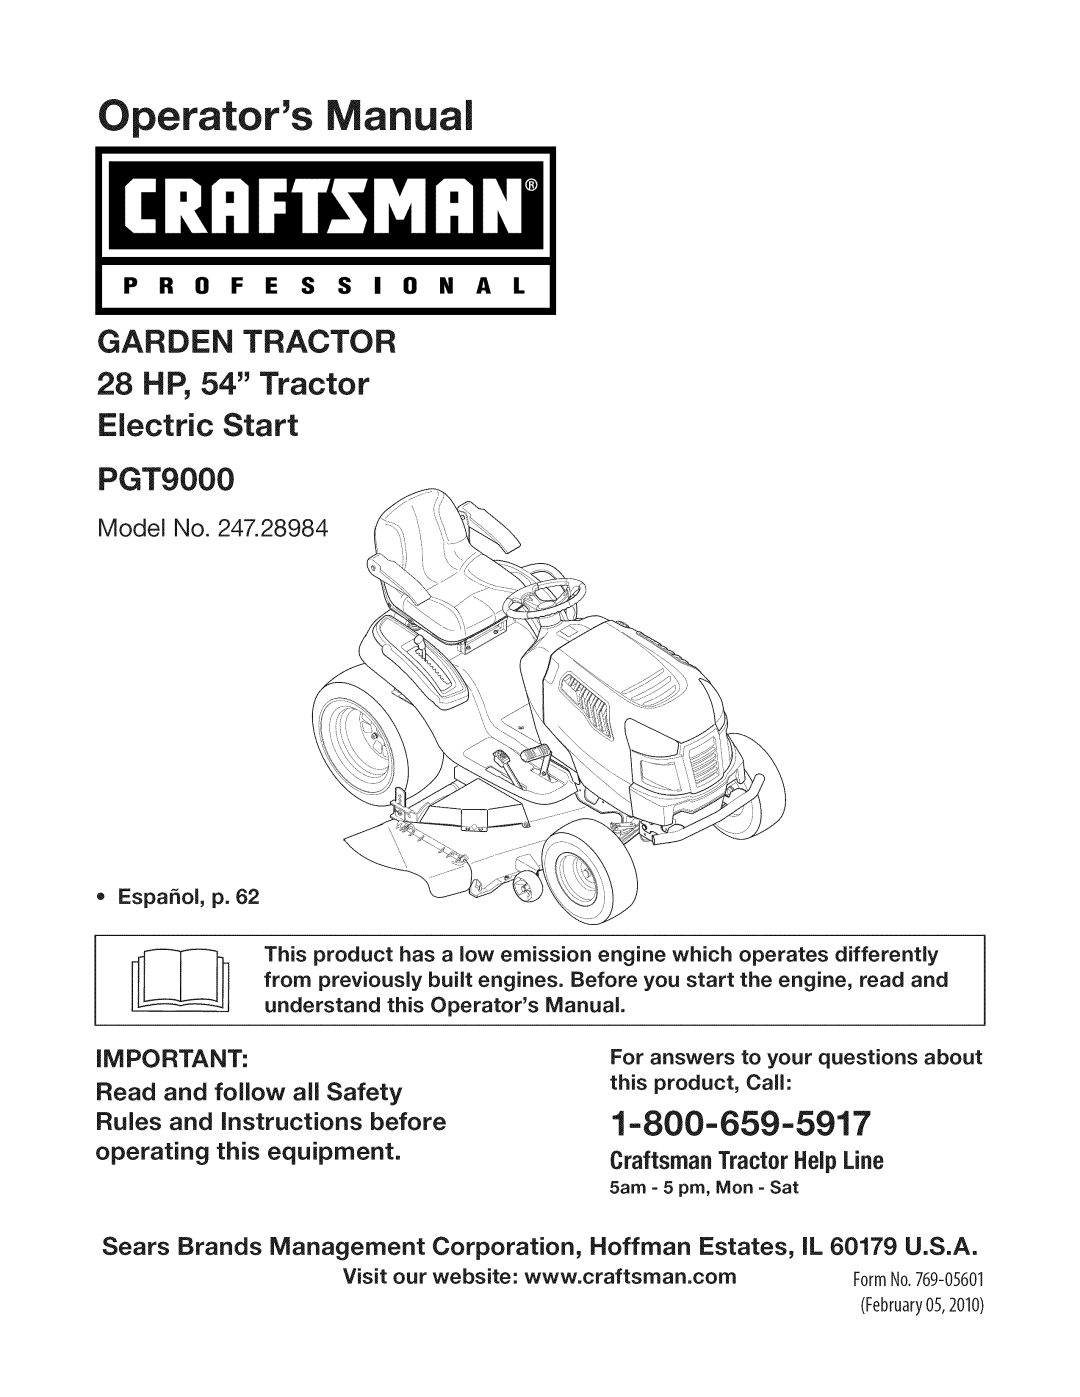 Craftsman 247.28984 manual perator s, 1=800=659=5917, Garden Tractor, 28 HP, 54 Tractor, Electric Start, PGT9000, Read 